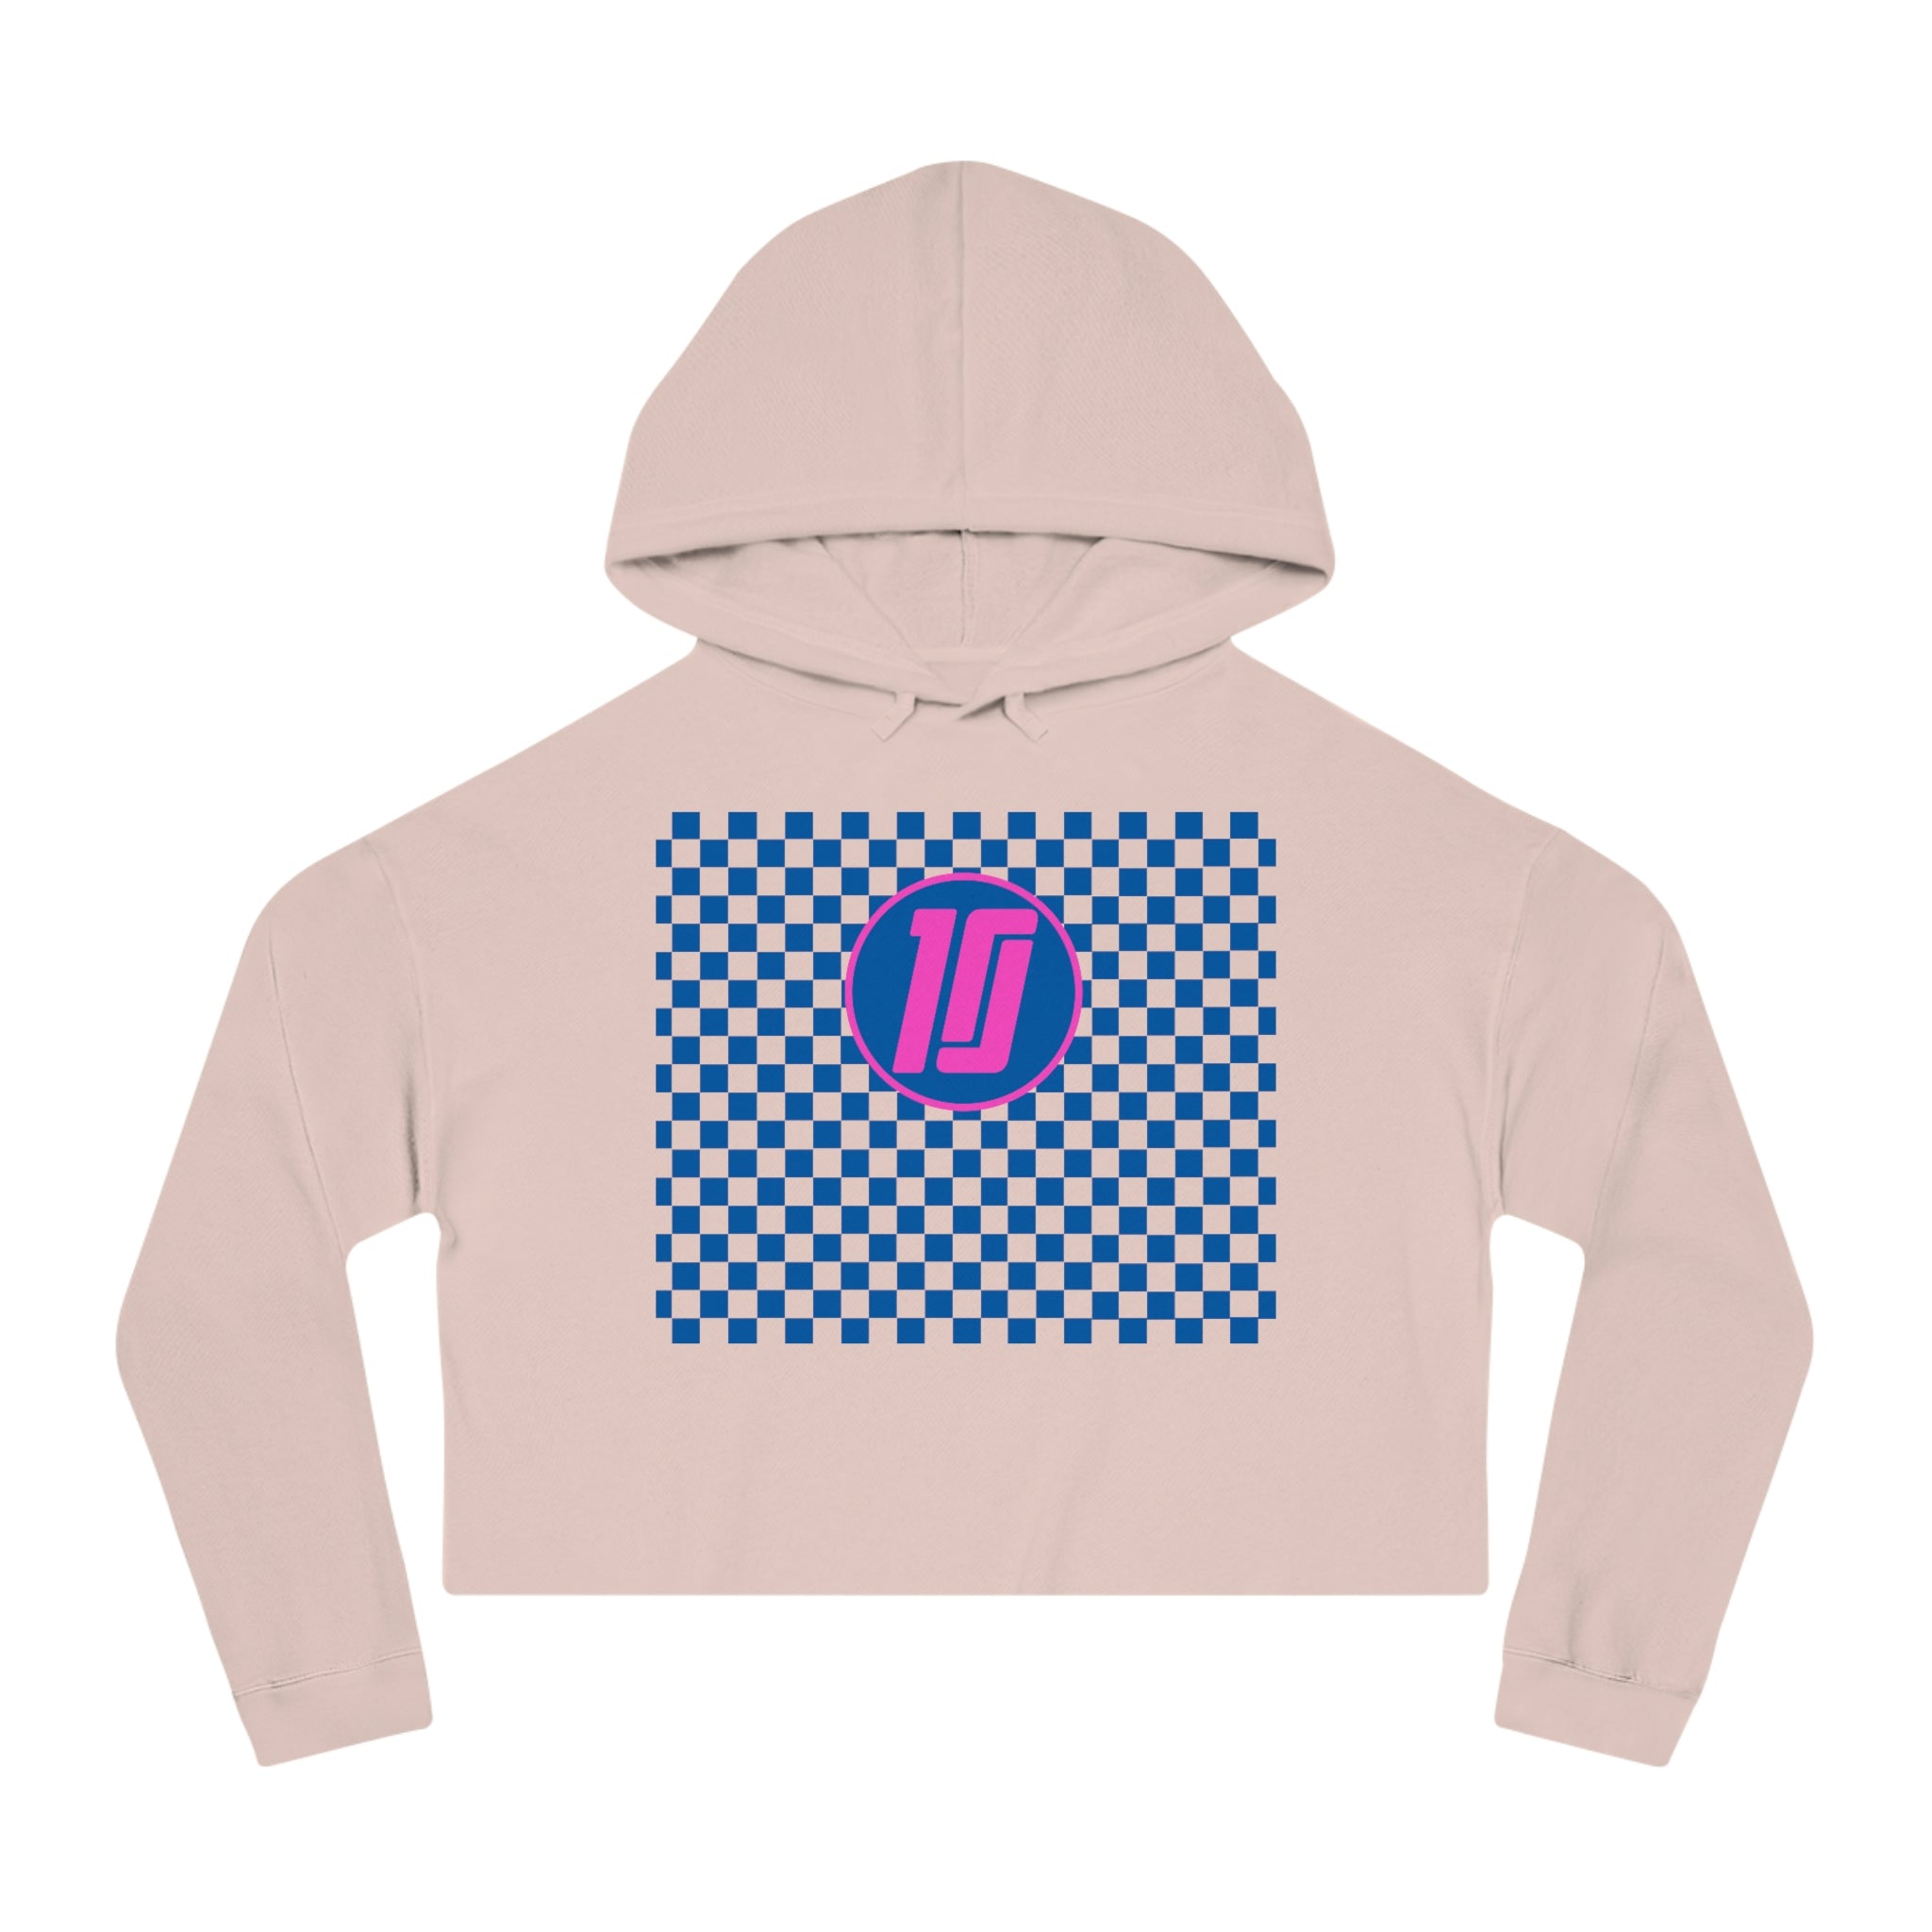 Checkered 10 Women’s Cropped Hooded Sweatshirt - FormulaFanatics